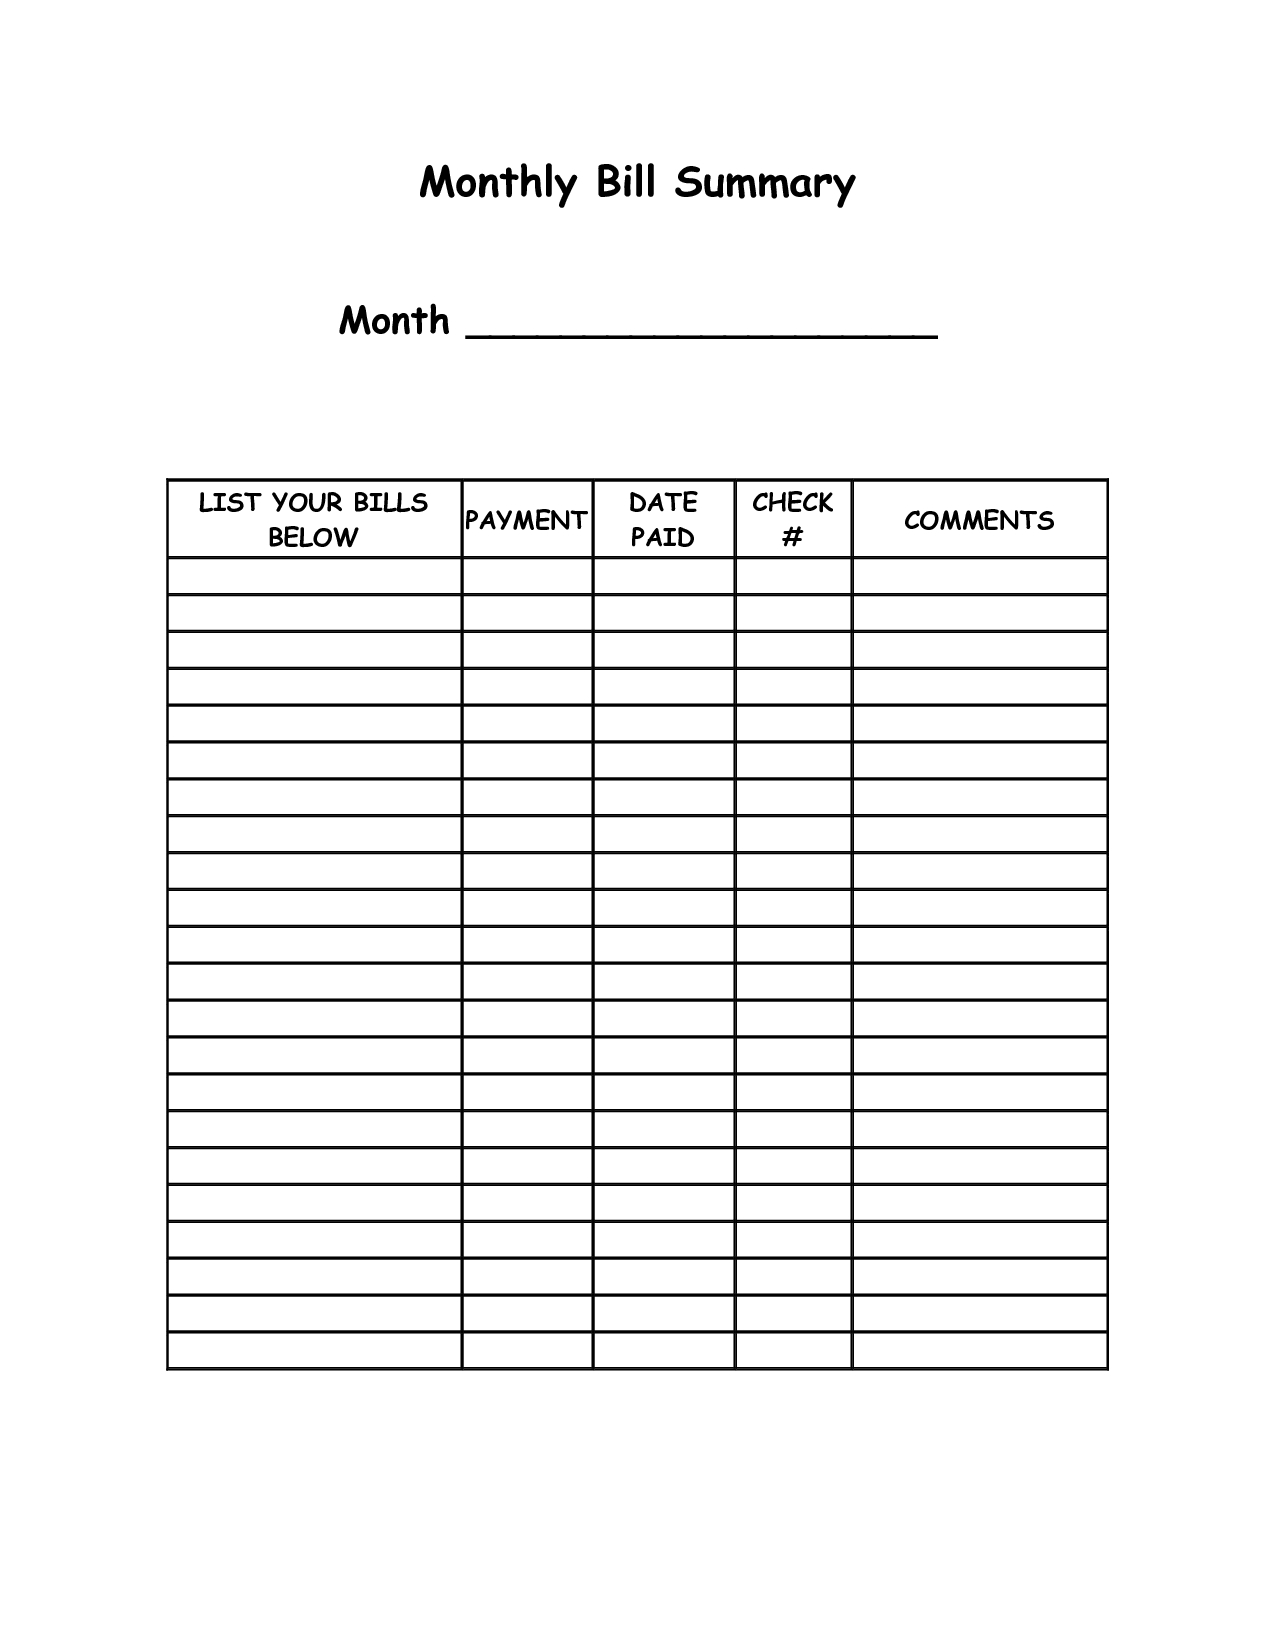 Monthly Bill Summary Doc | Organization | Bill Payment Organization pertaining to Free Printable Bill Budget Calendar